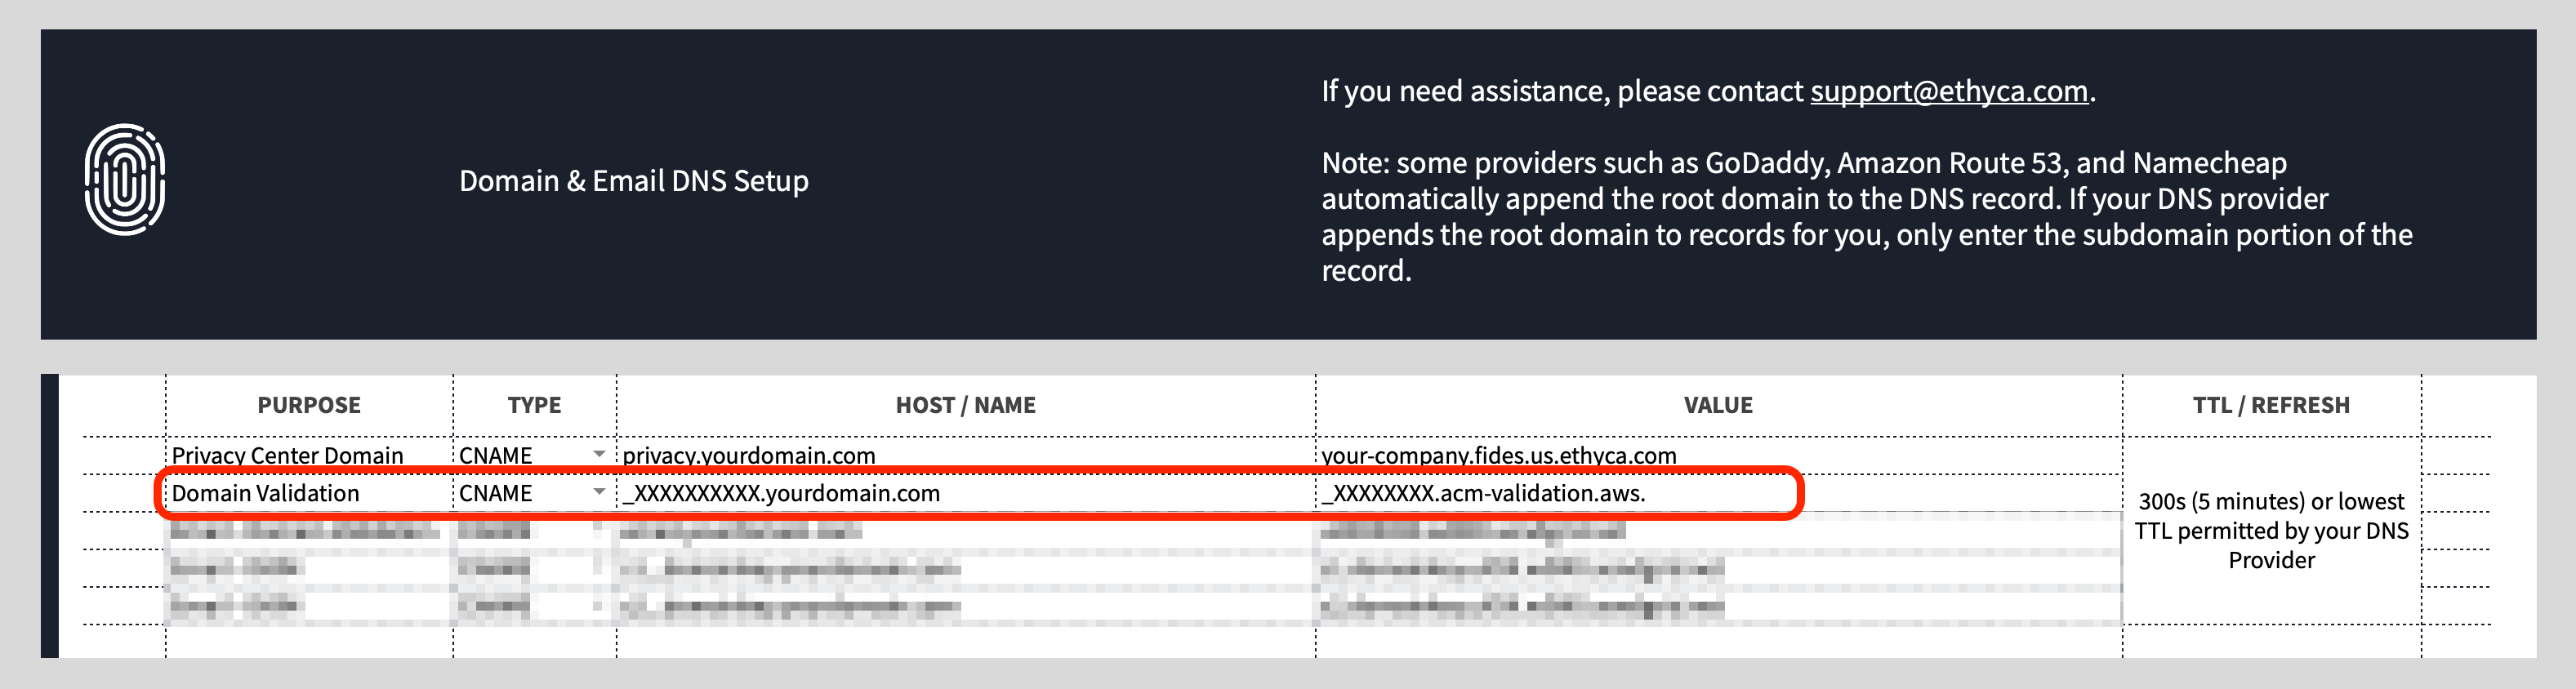 Domain name verification - example DNS record